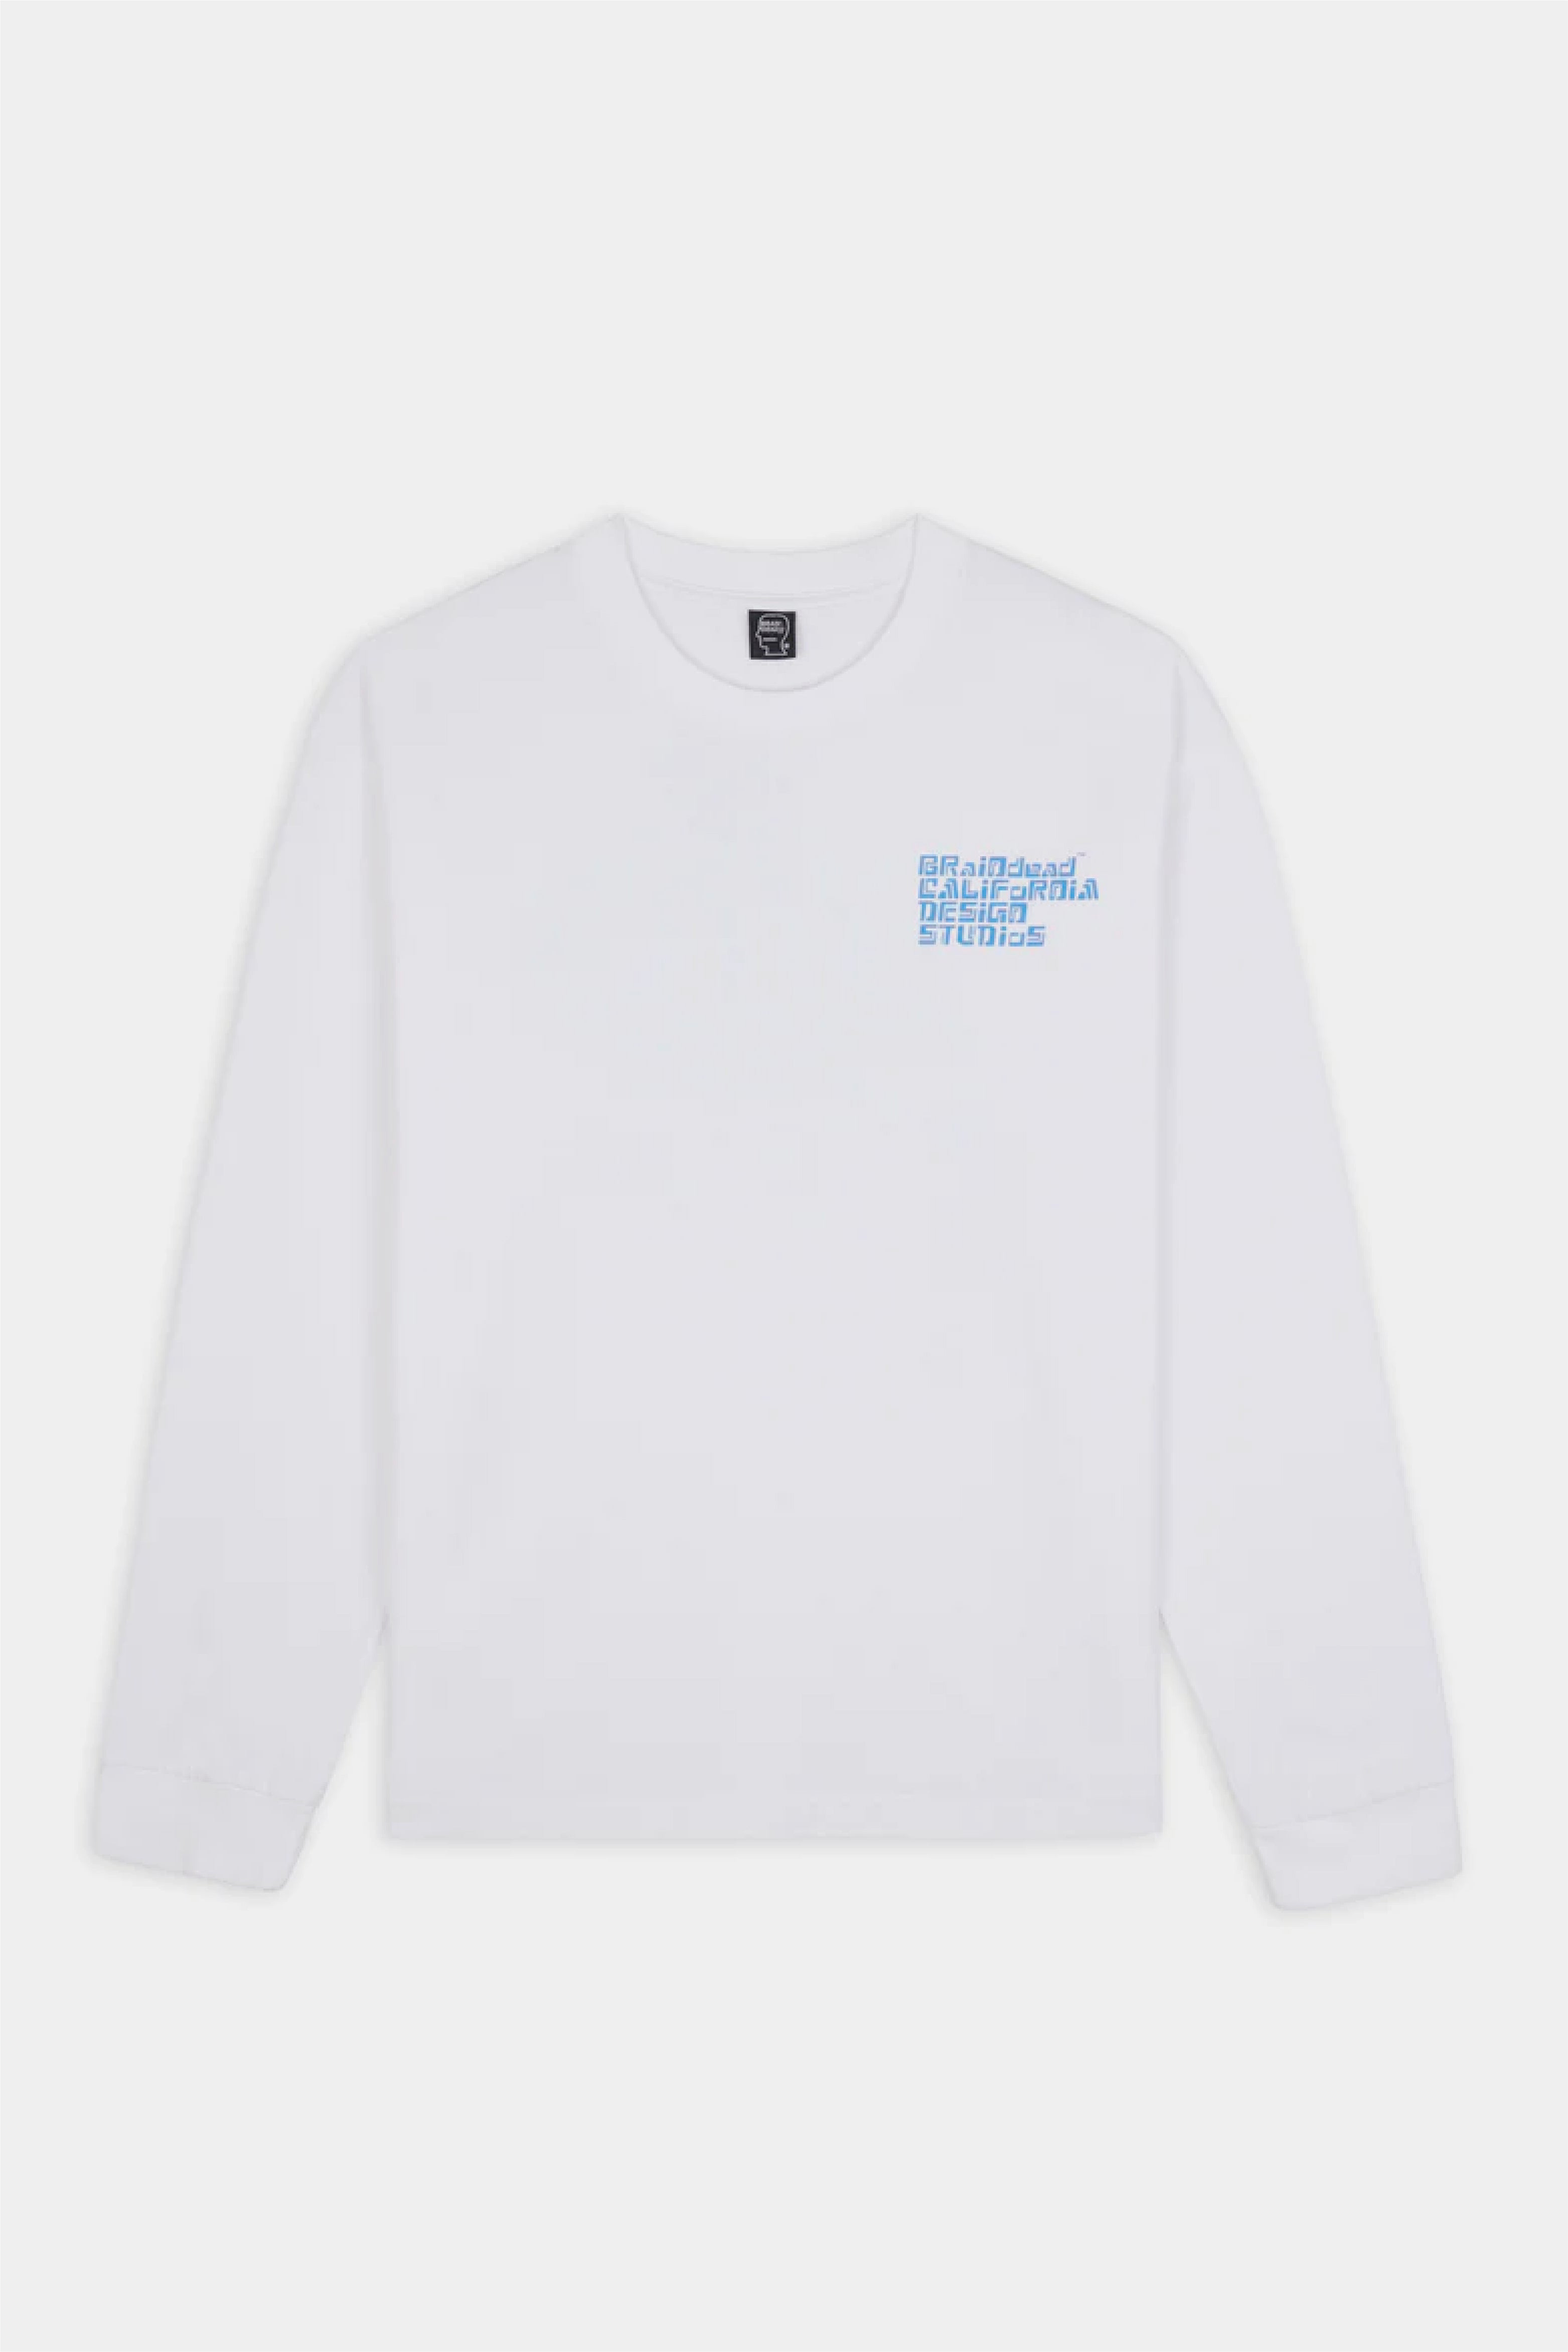 Selectshop FRAME - BRAIN DEAD Permit Everything Long Sleeve Tee T-Shirts Dubai